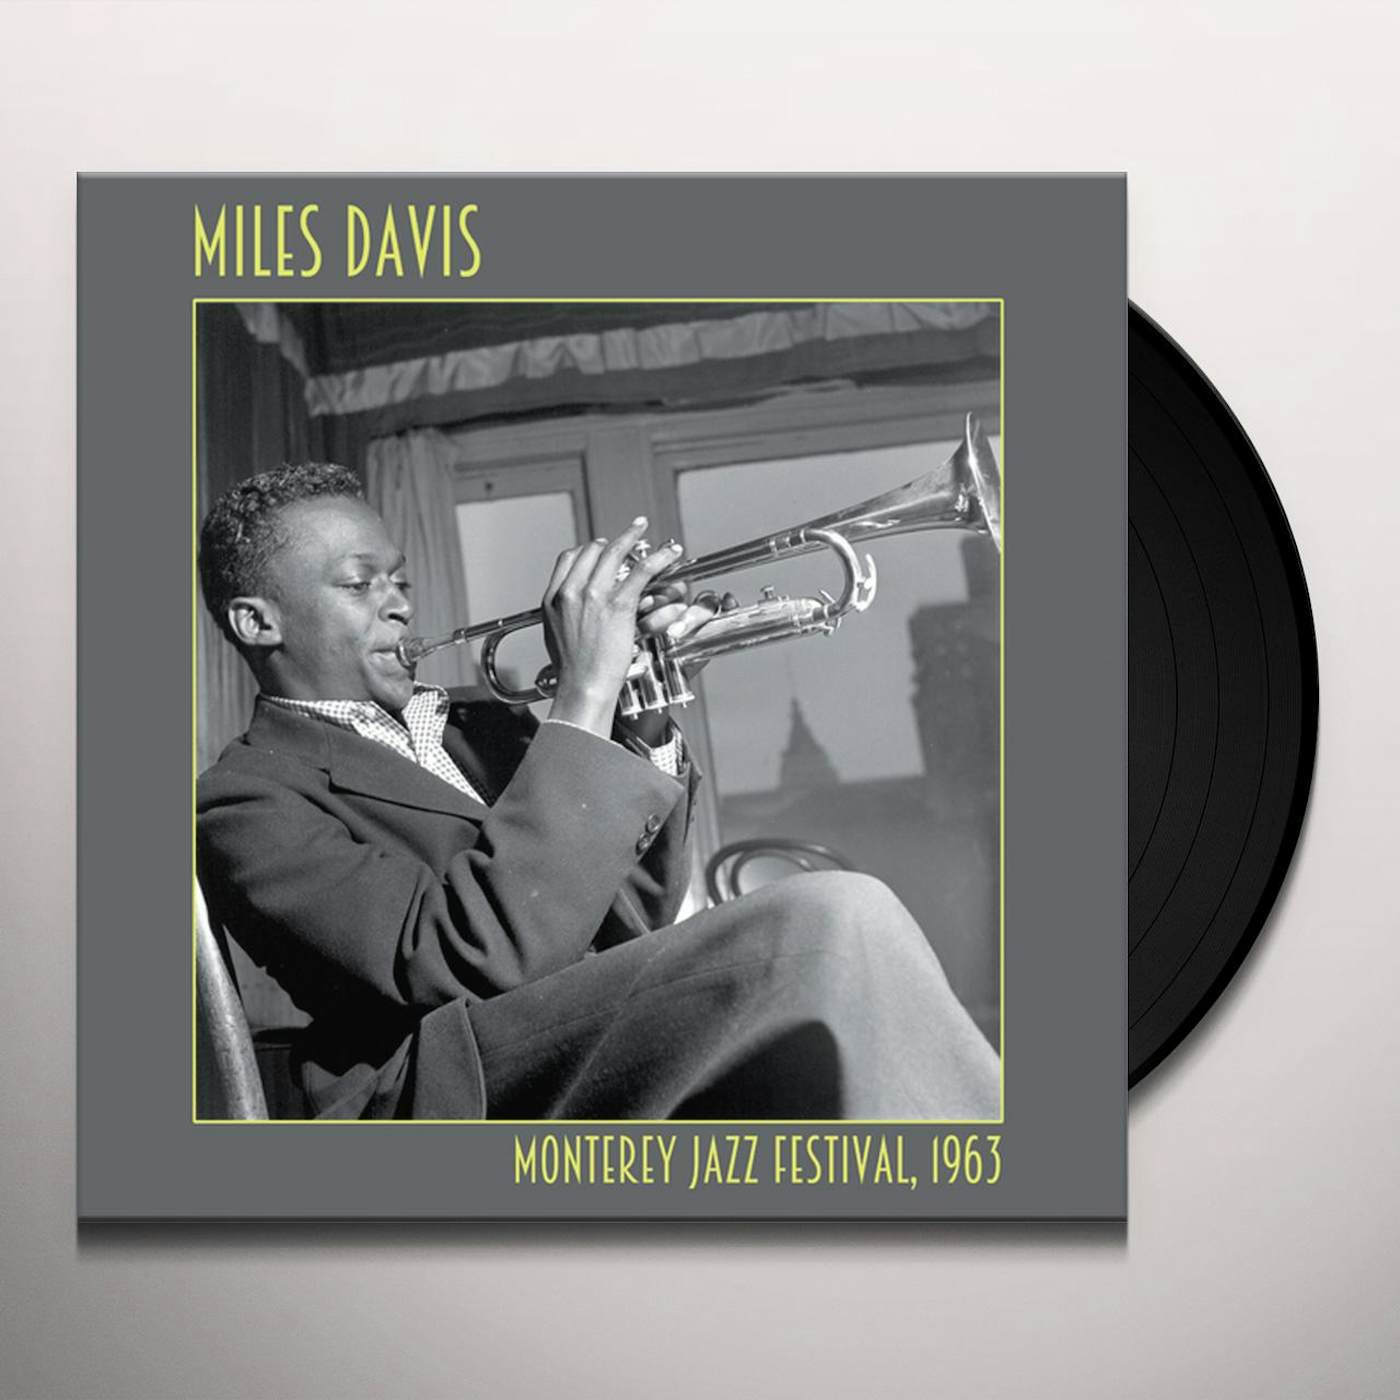 Miles Davis MONTEREY JAZZ FESTIVAL, 1963 Vinyl Record